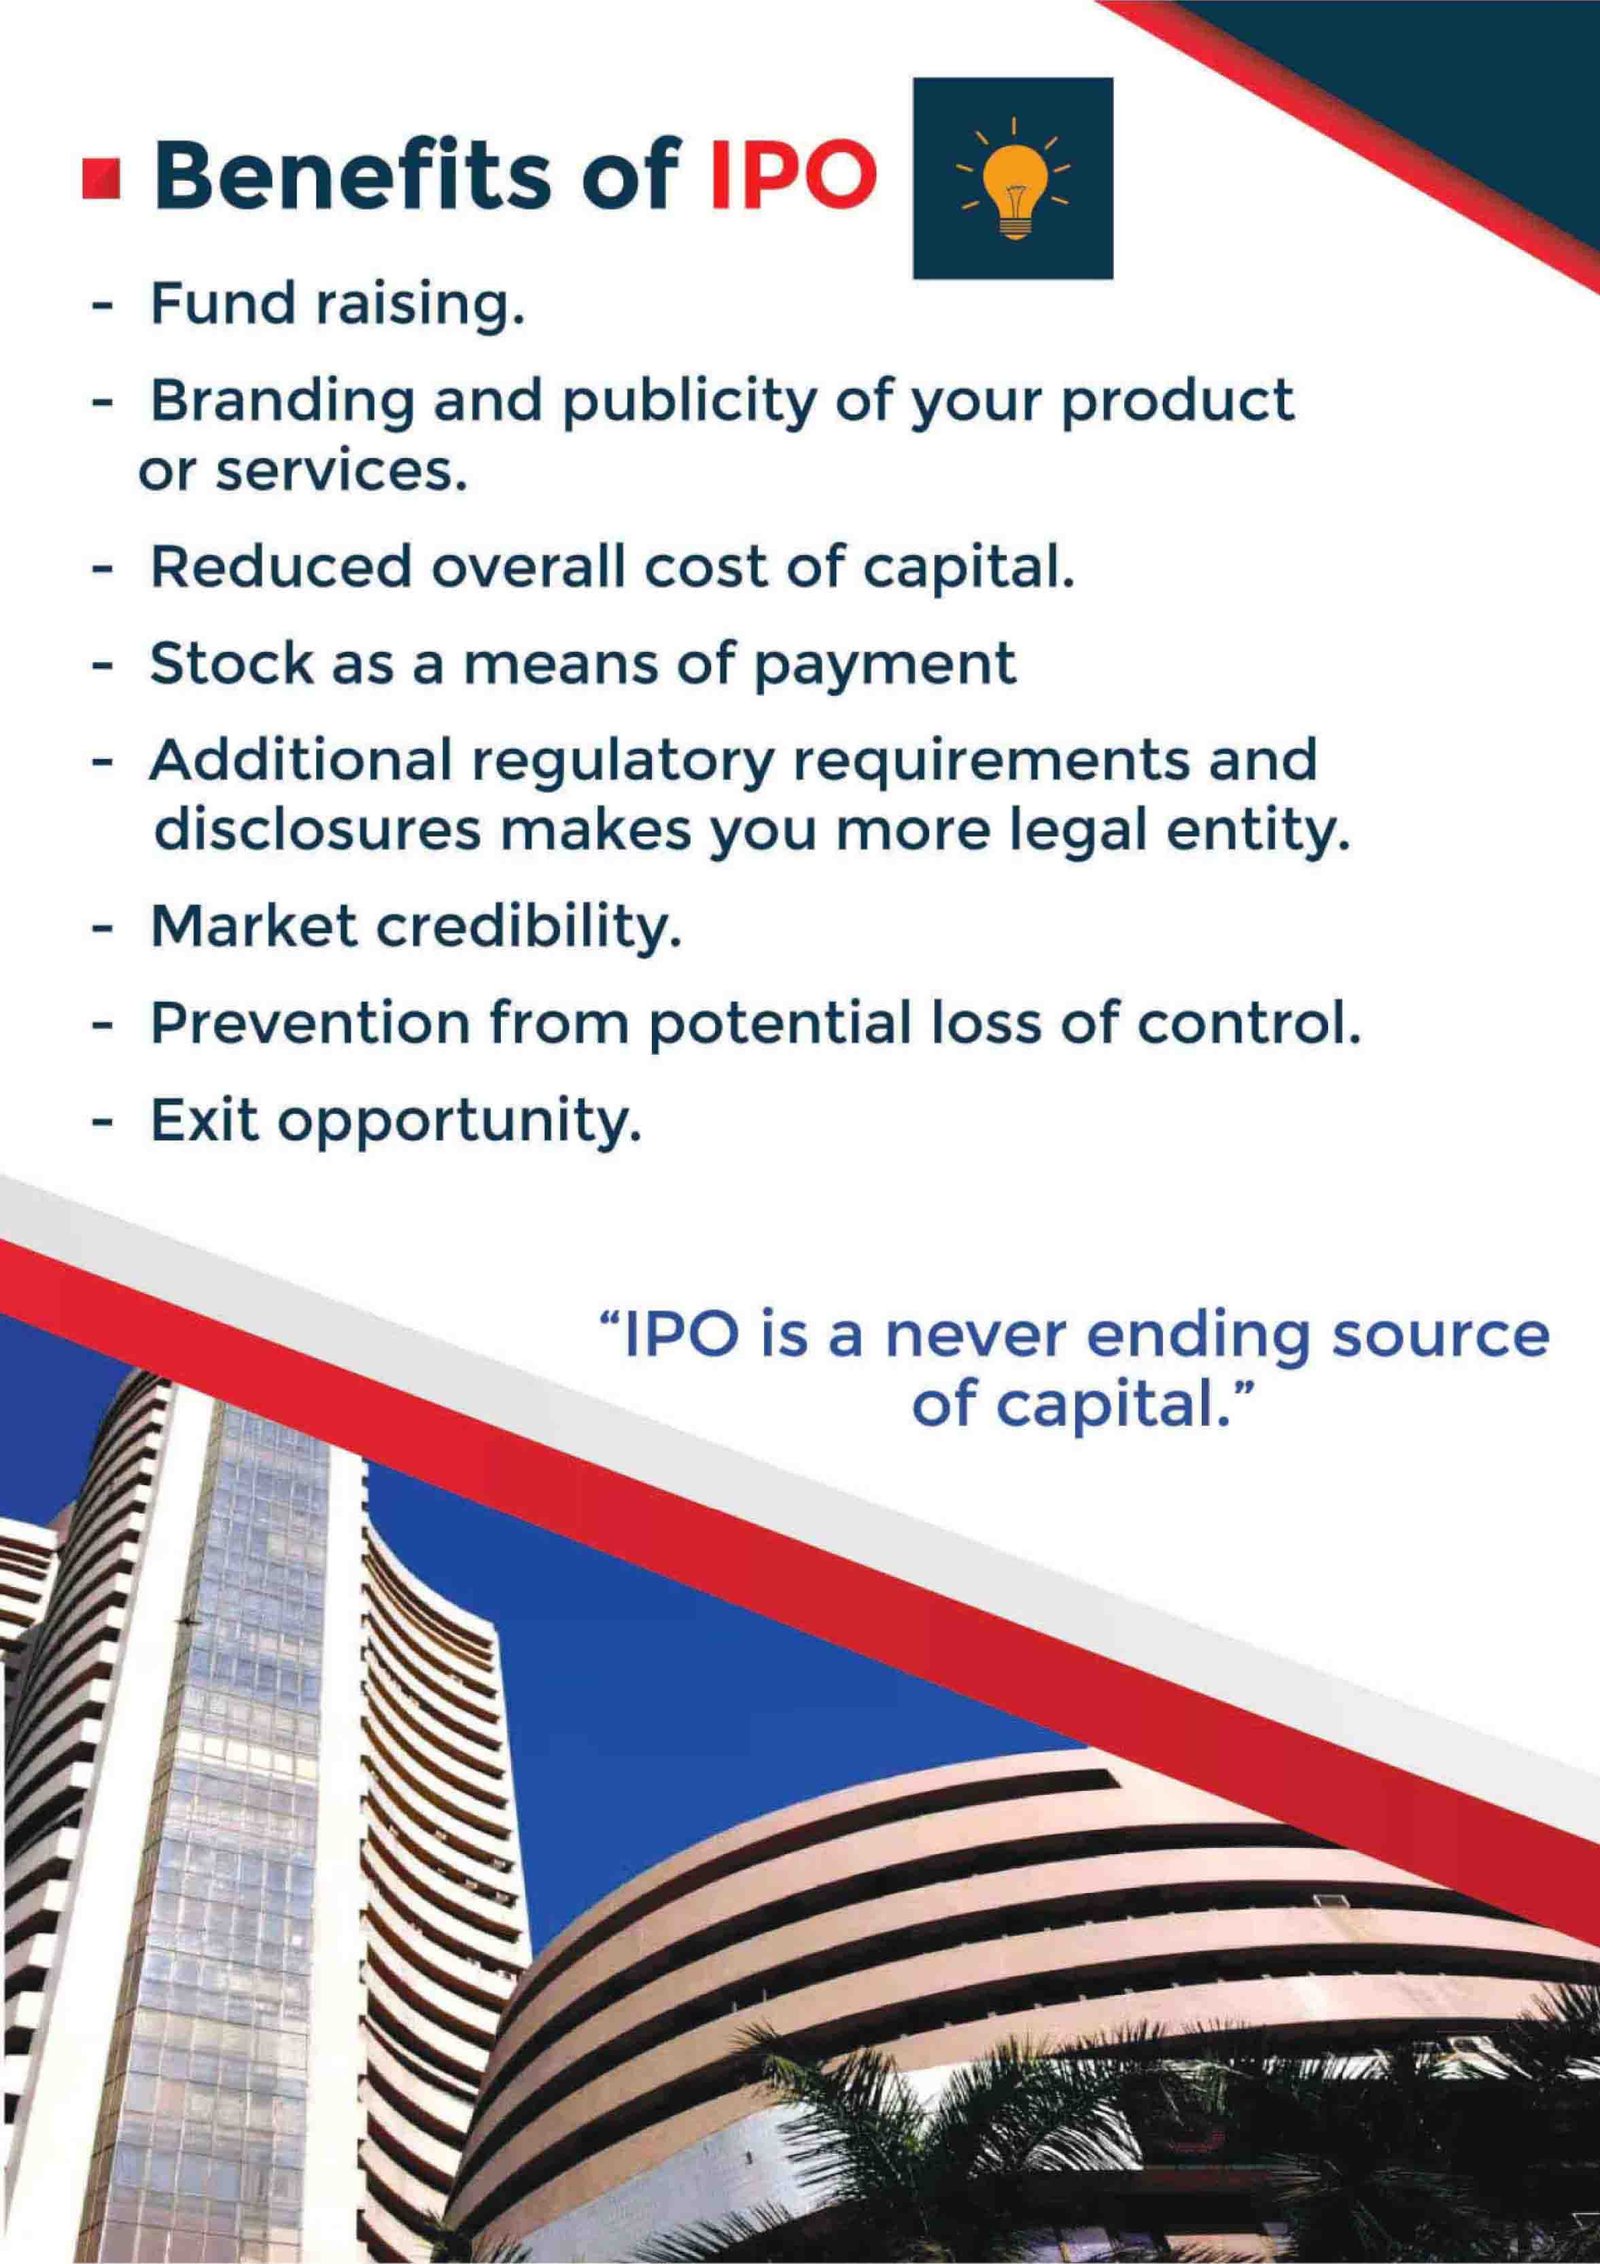 ipo consultants in india 